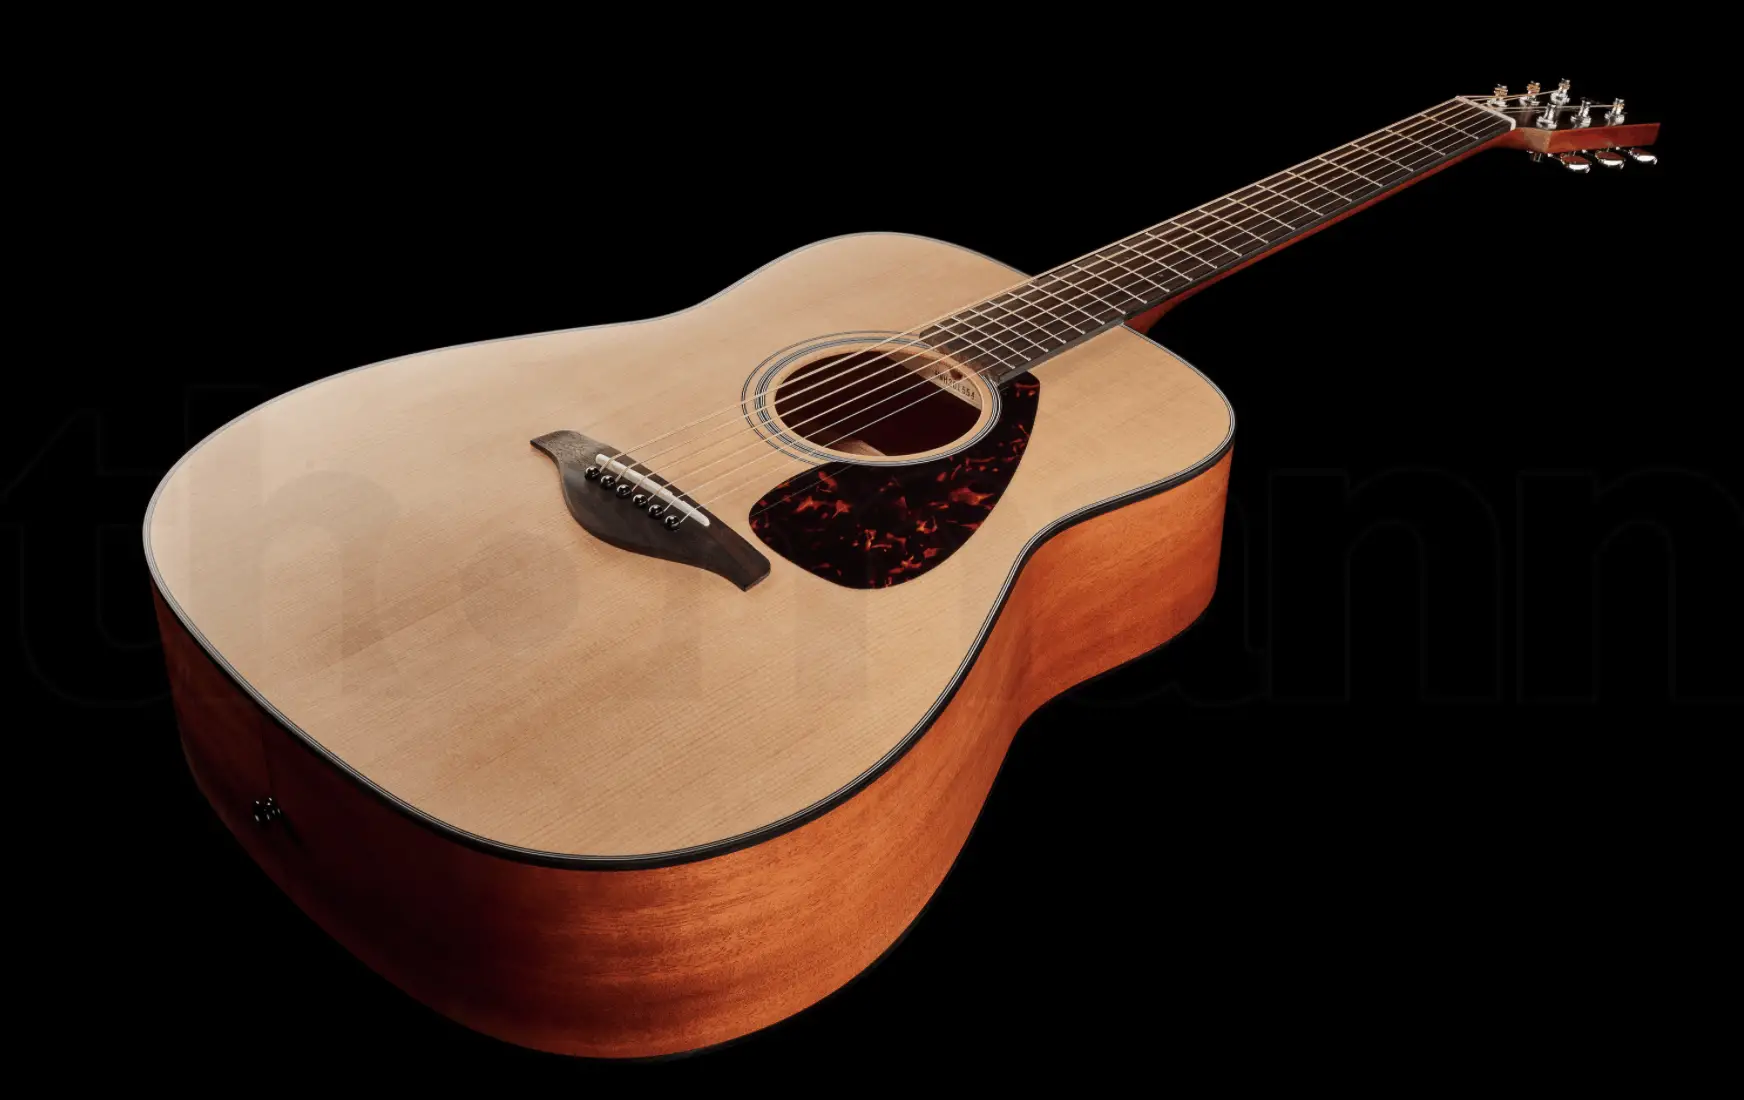 Miglior chitarra folk per principianti Yamaha FG800M